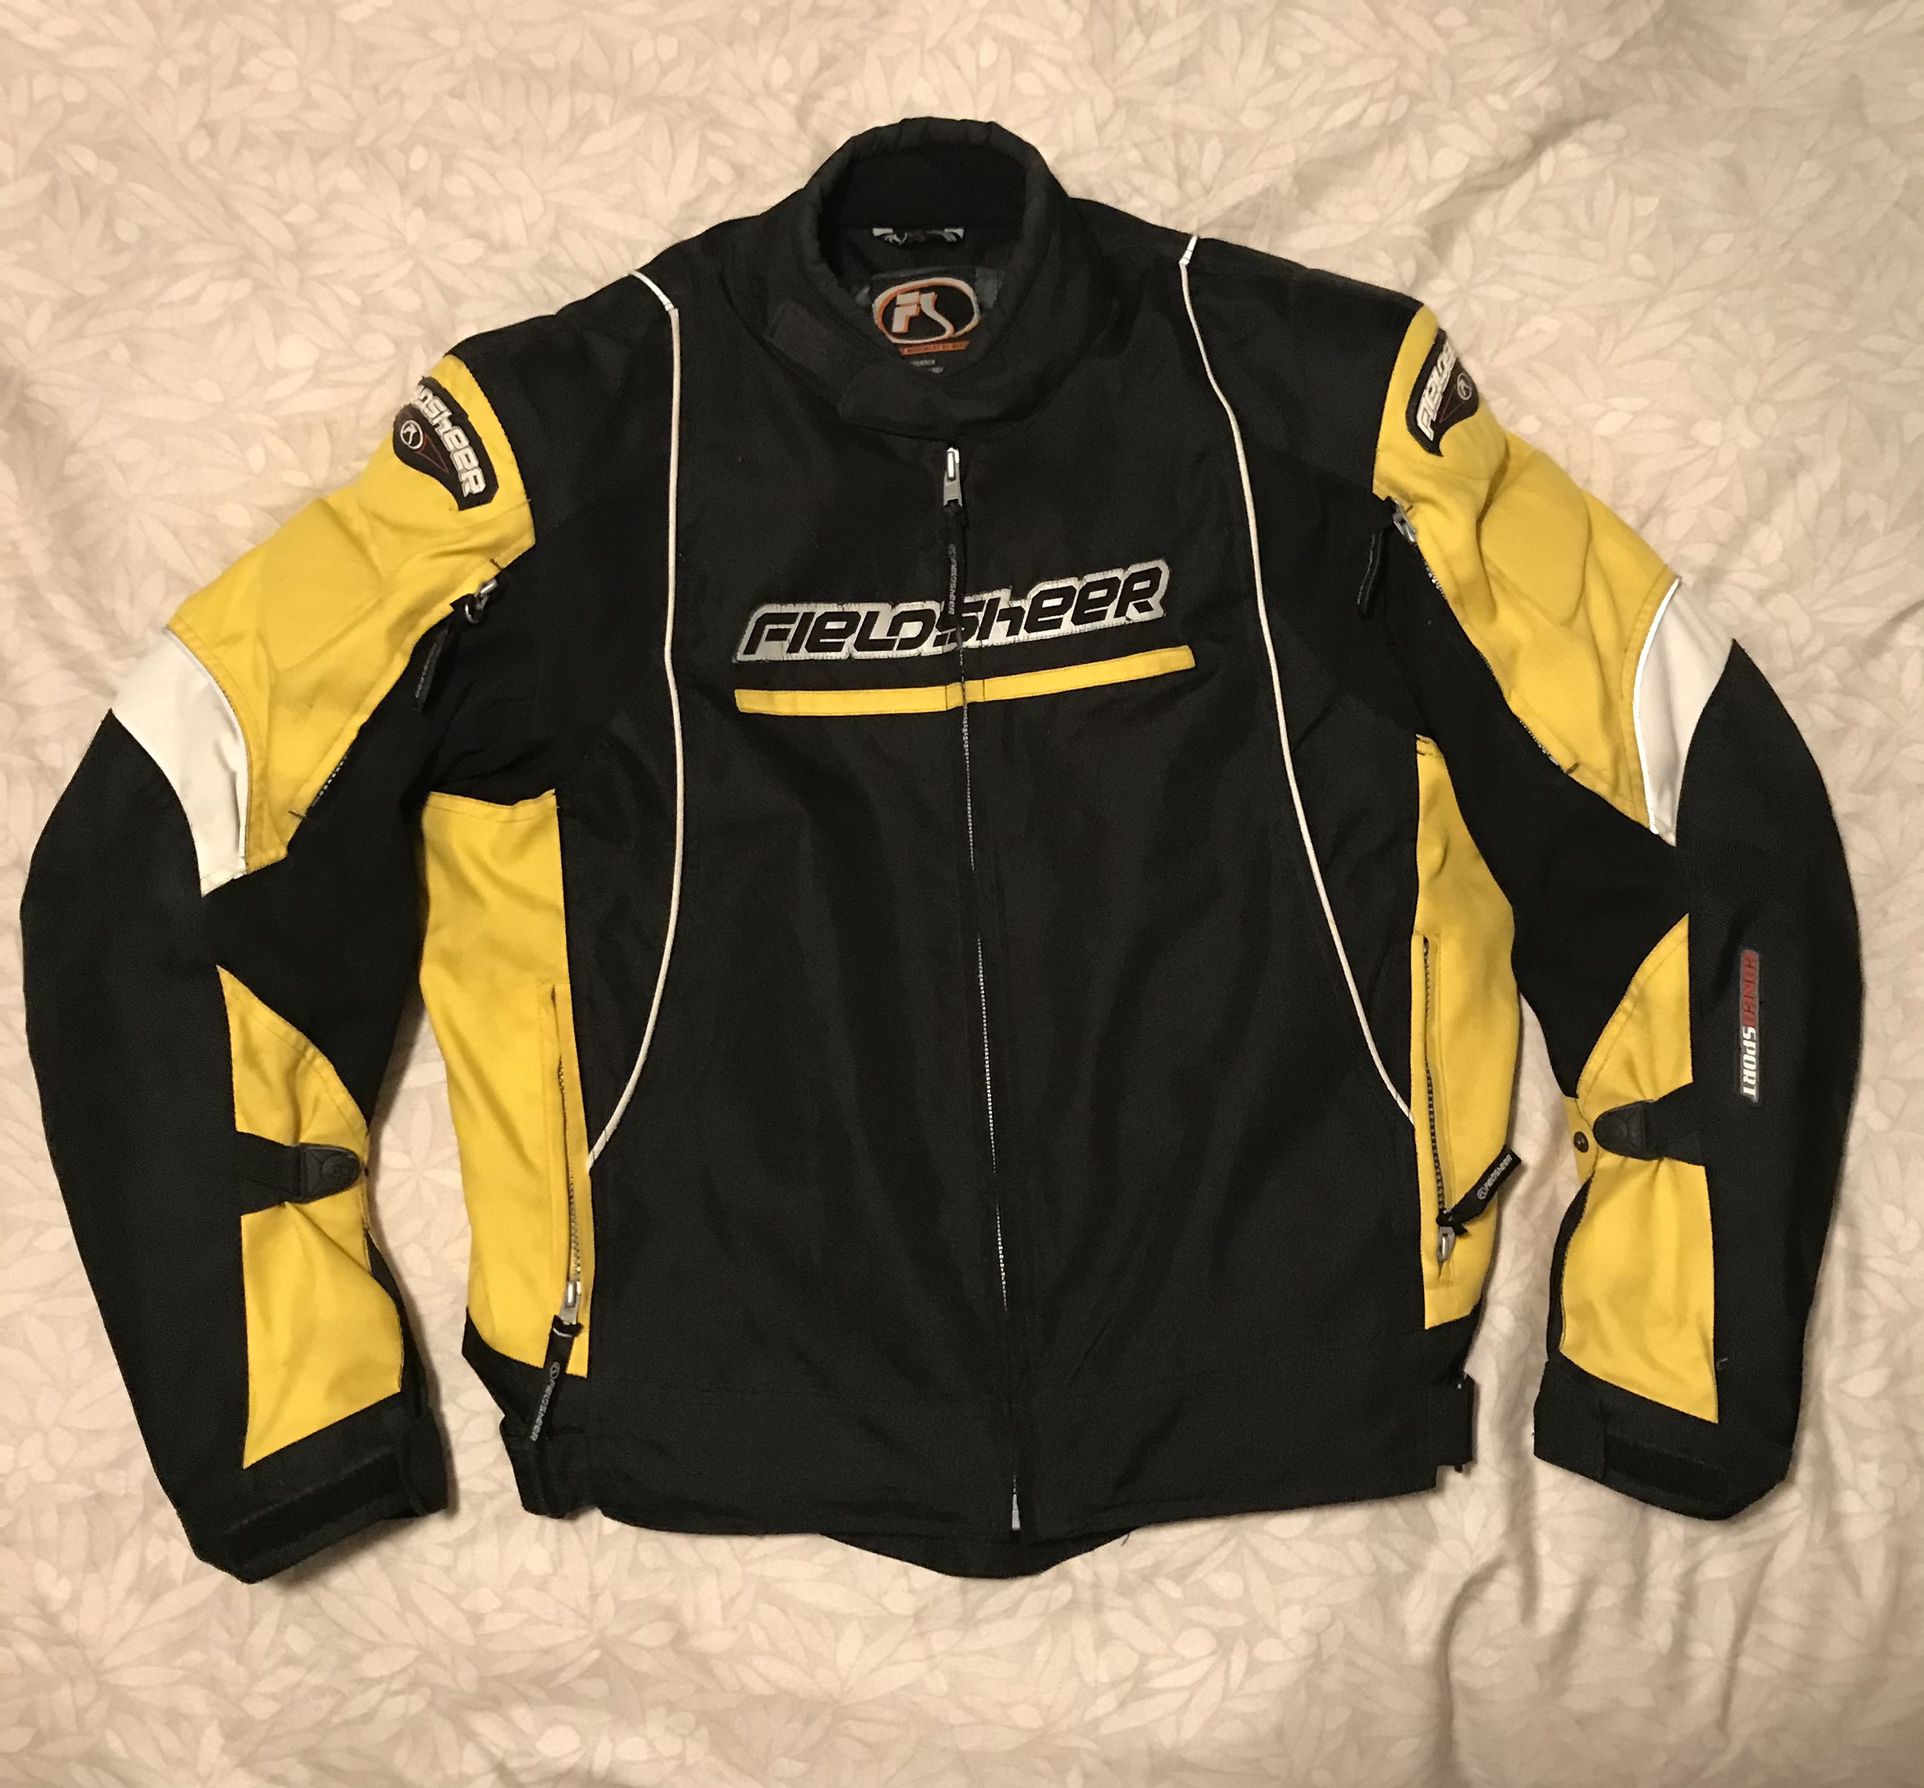 Motorcycle jacket - Fieldsheer - Men’s Size large